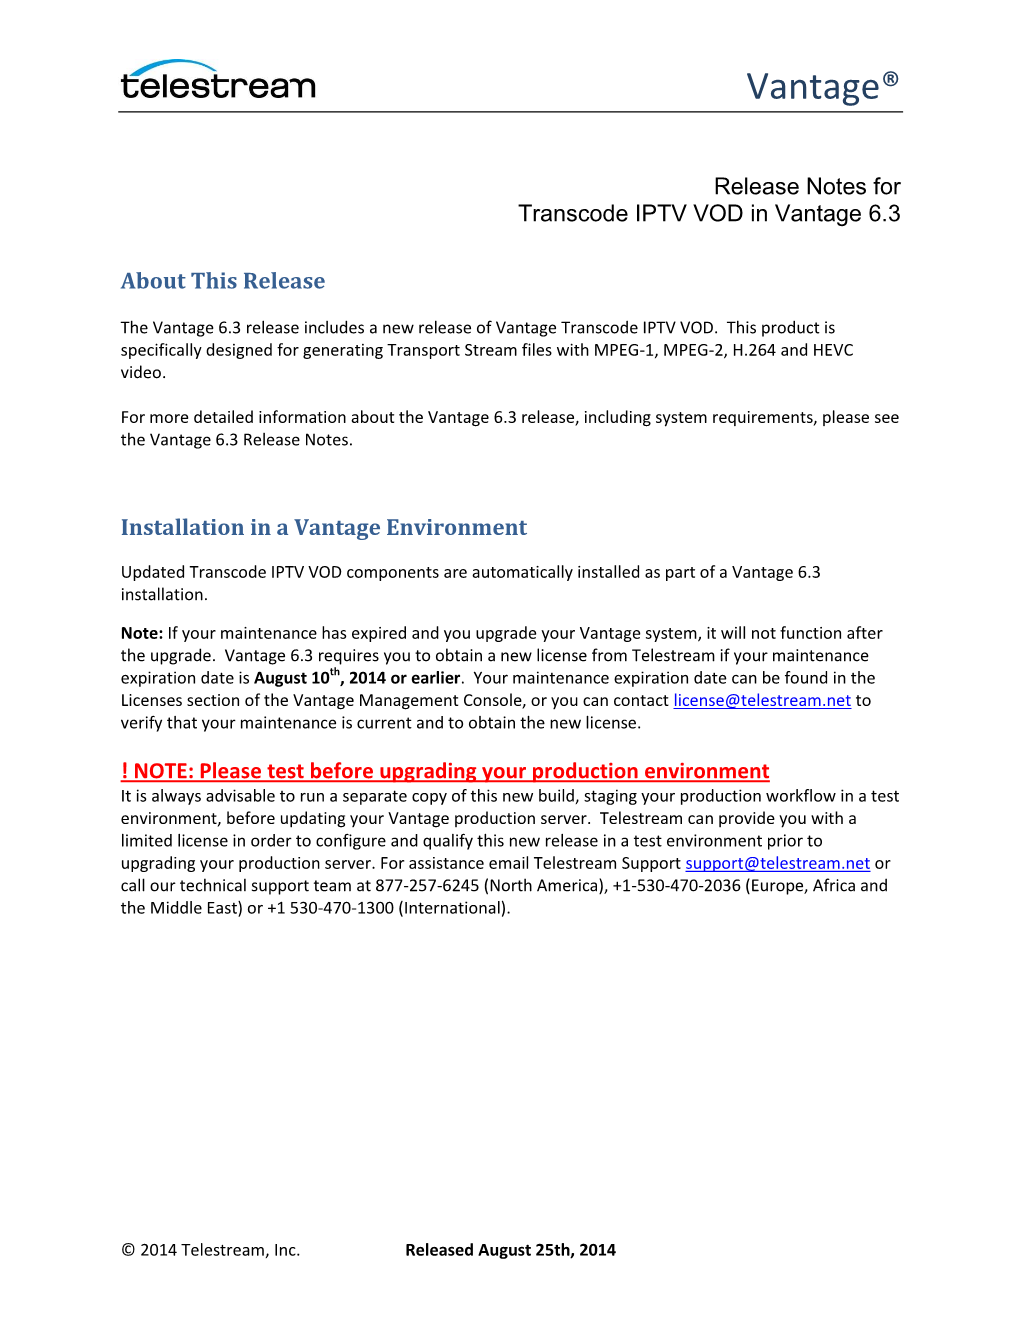 Vantage Transcode IPTV VOD